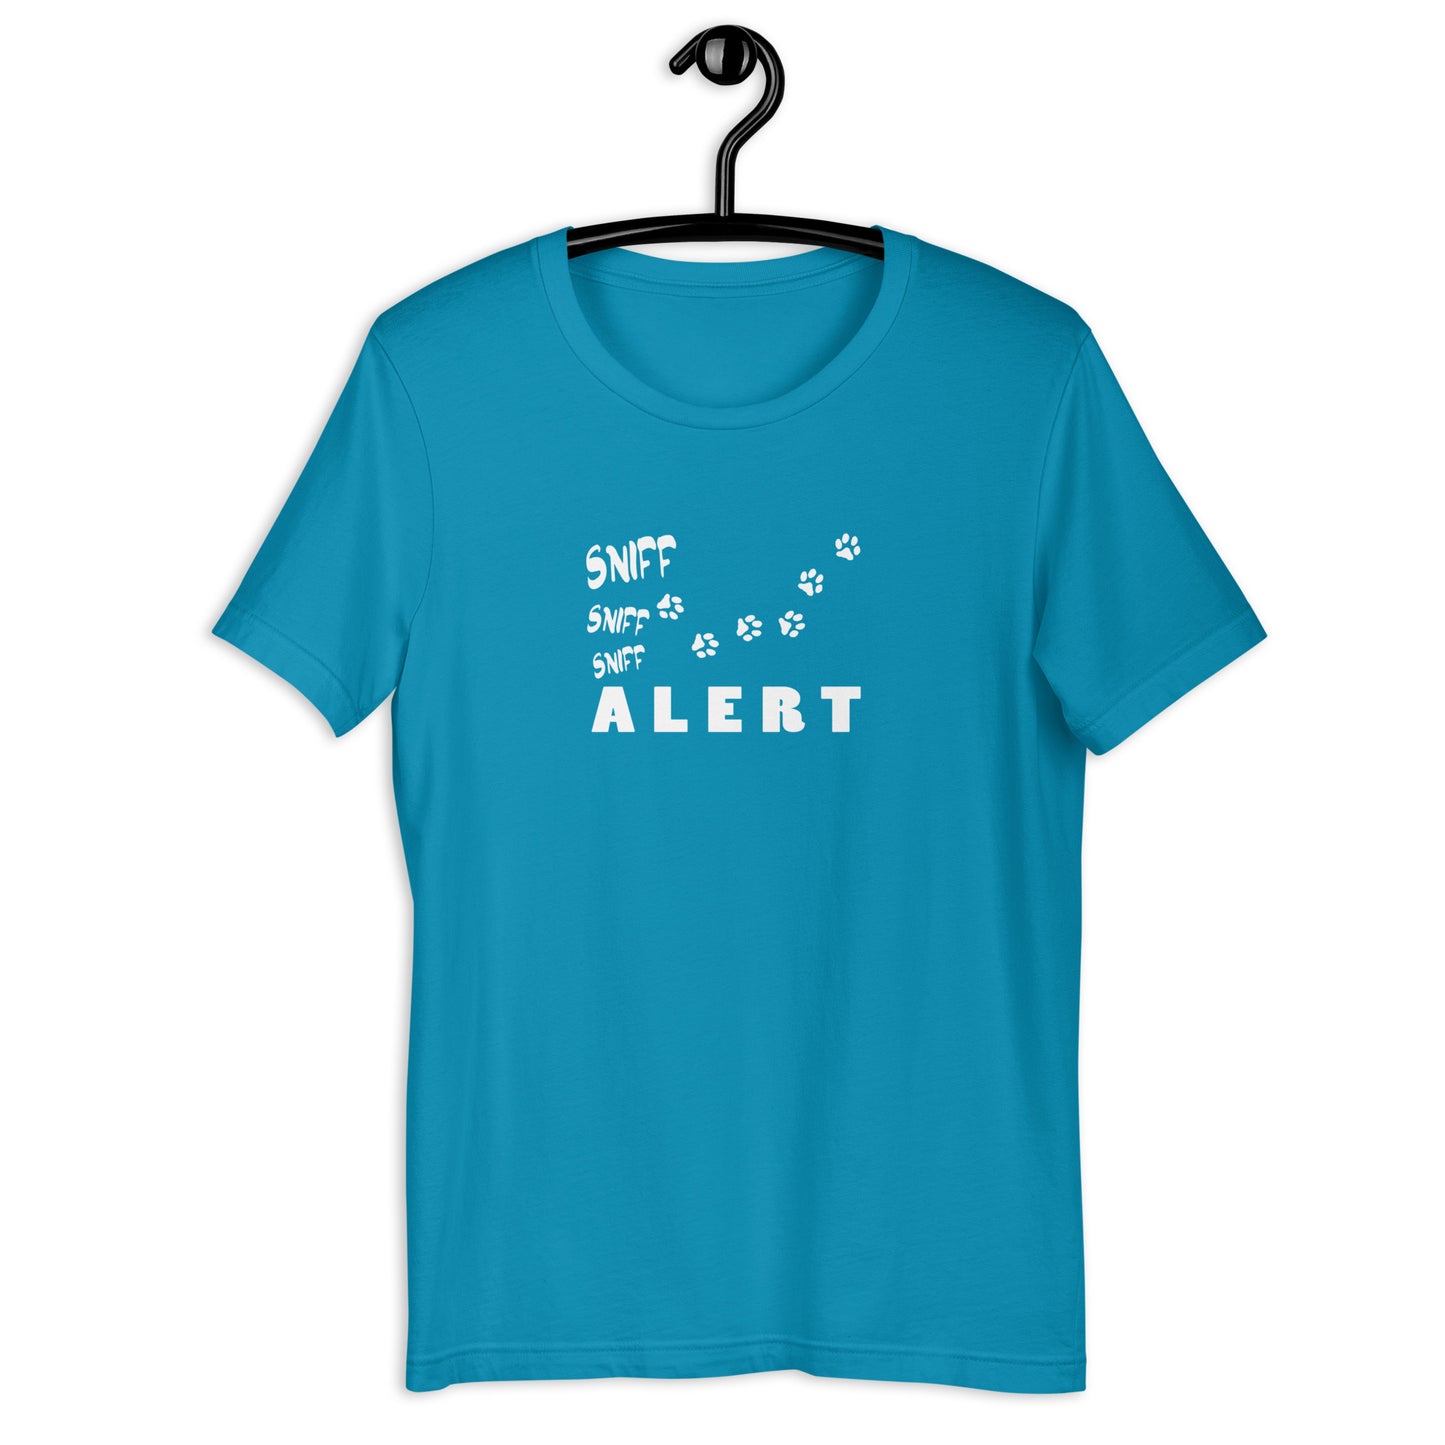 SNIFF SNIFF ALERT - Unisex t-shirt